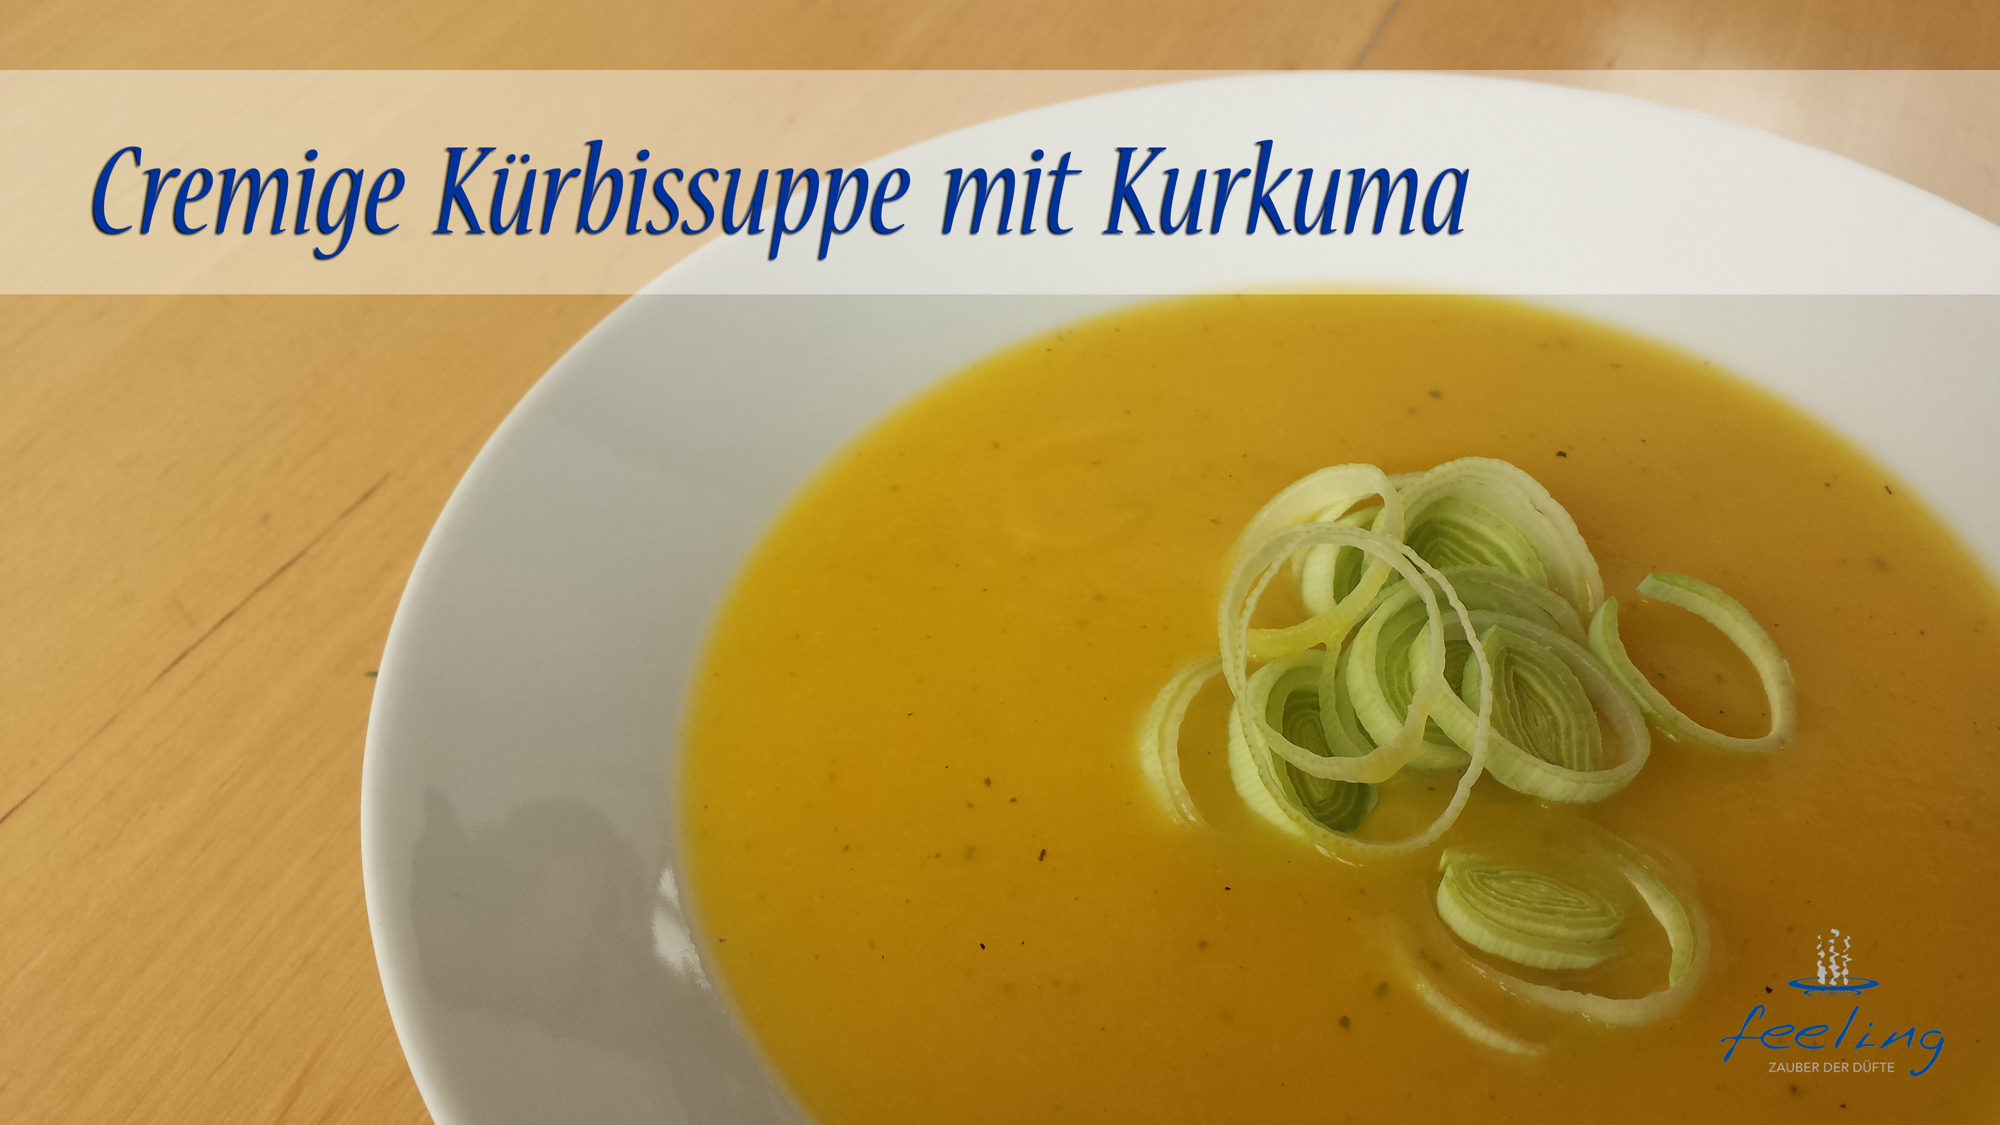 Cremige Kürbissuppe mit Kurkuma - feeling - Ätherische Öle